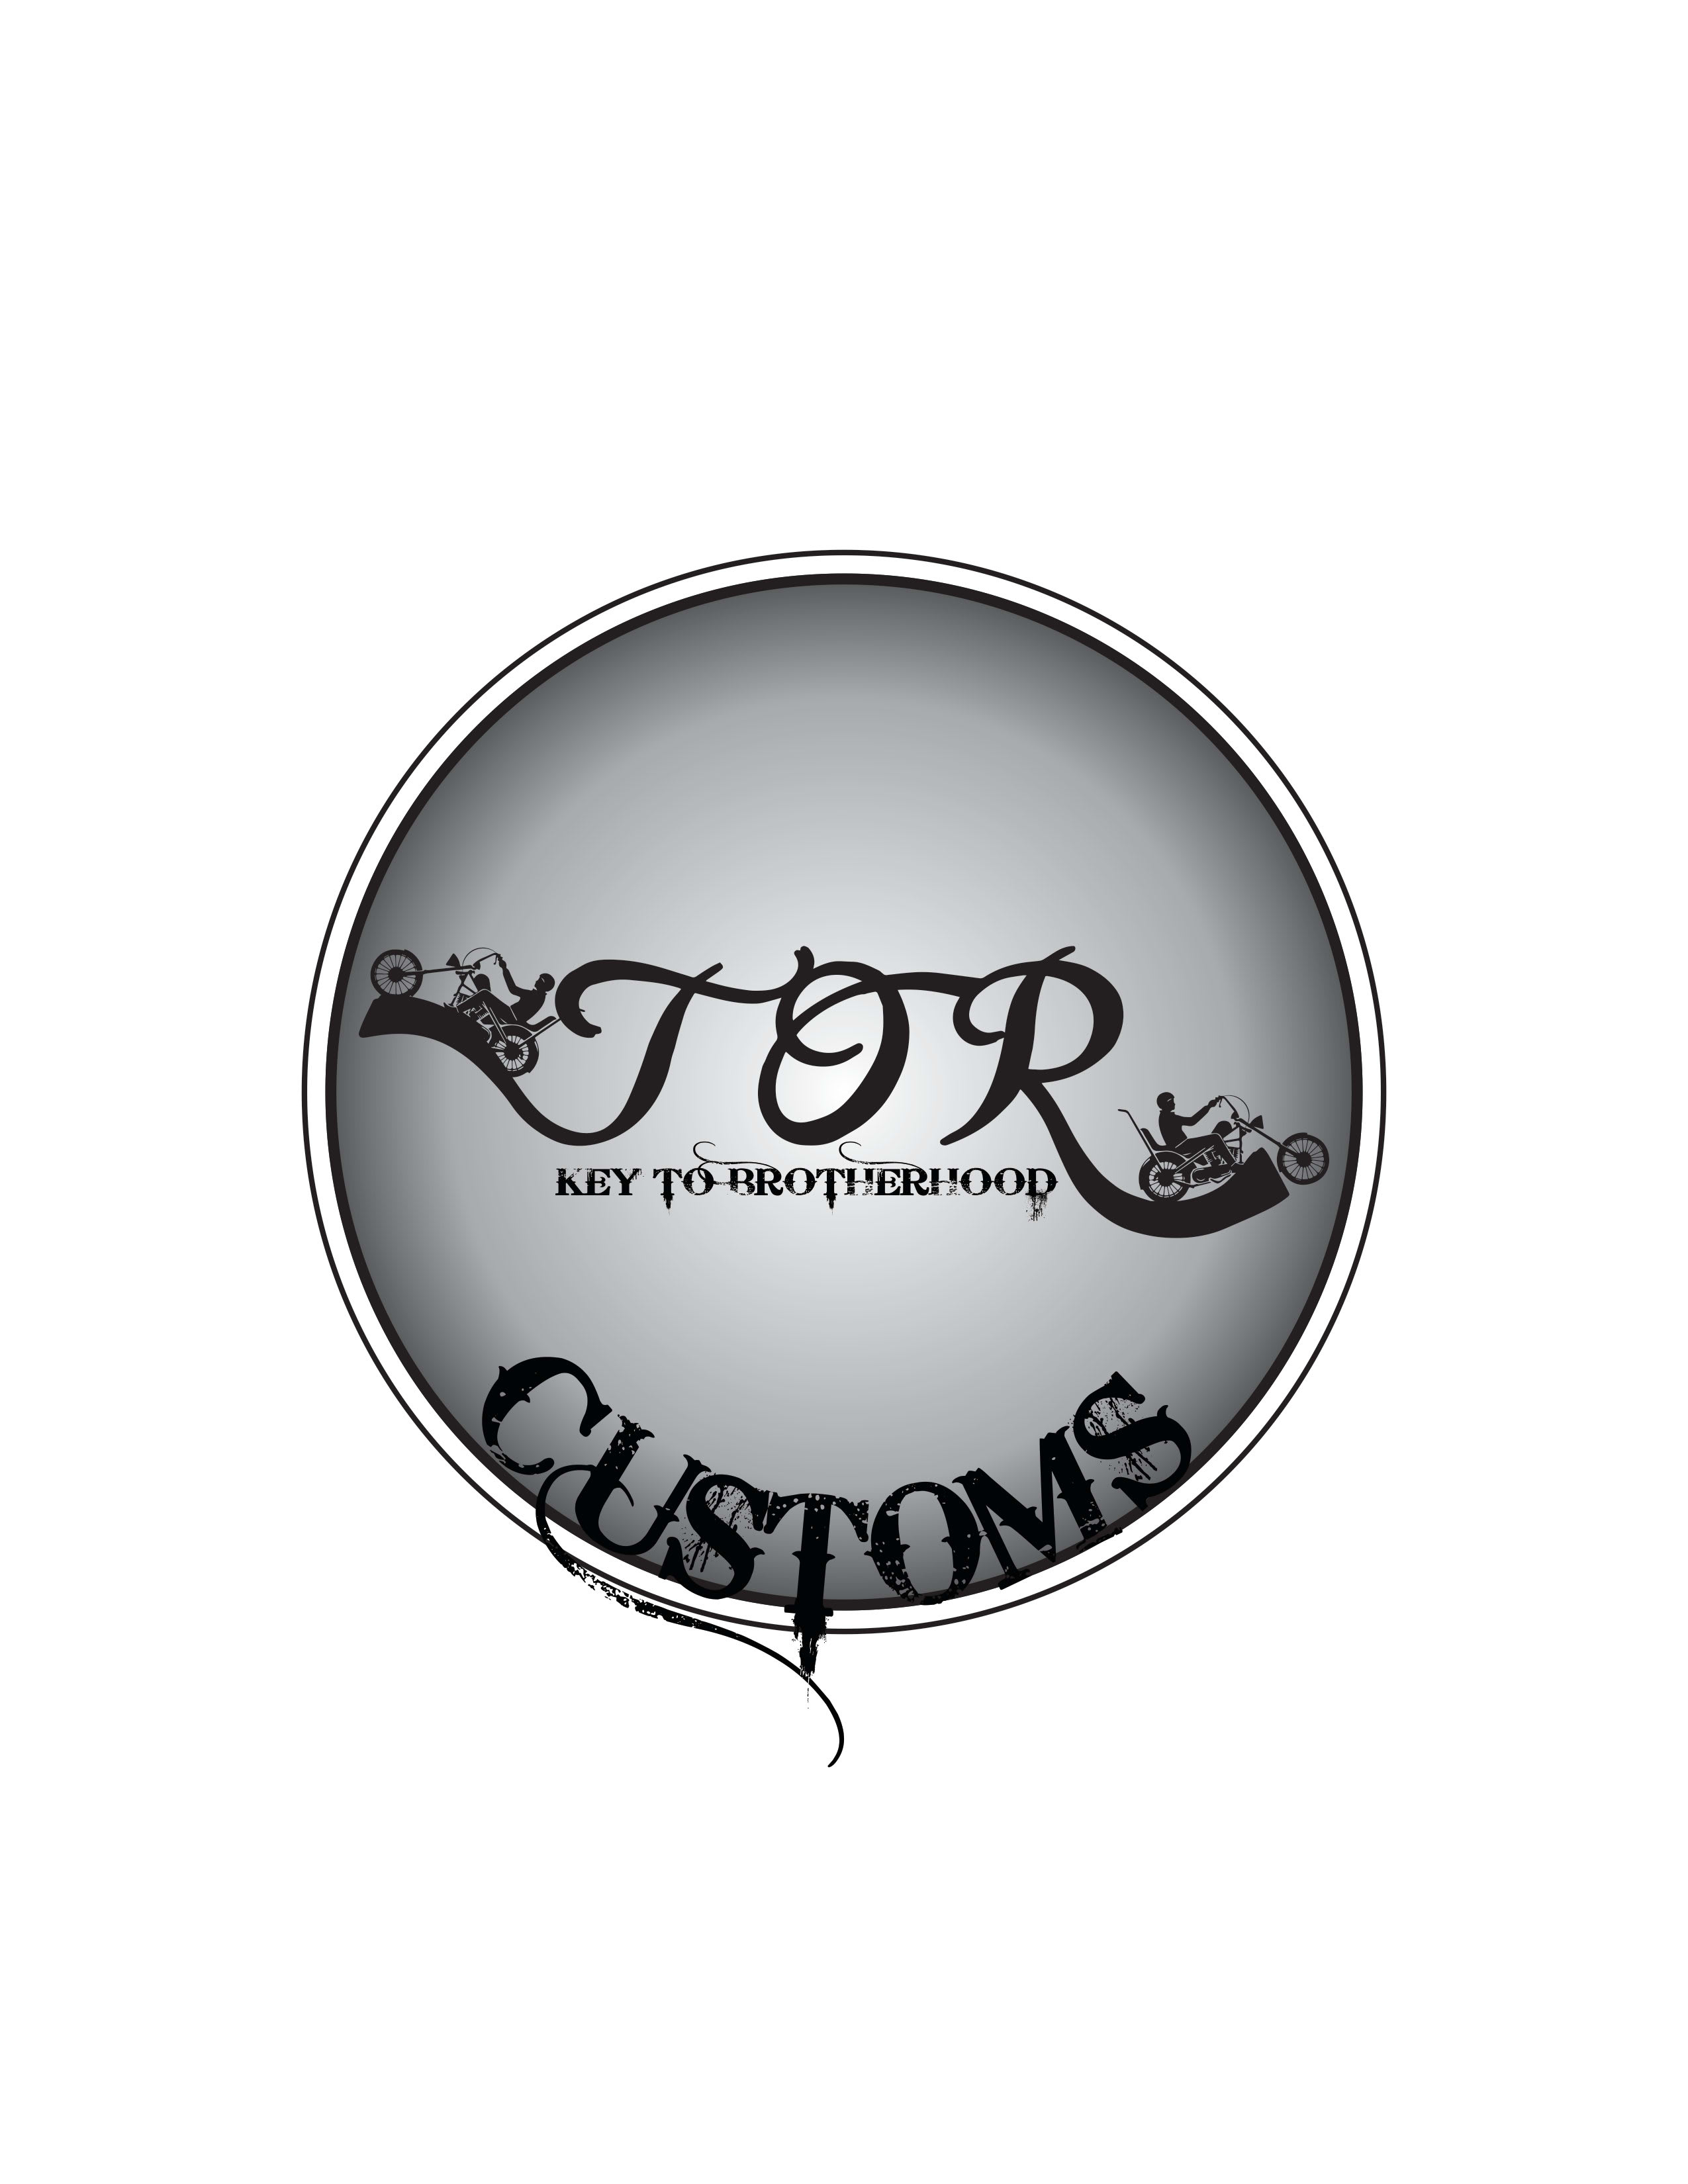 Jor Customs